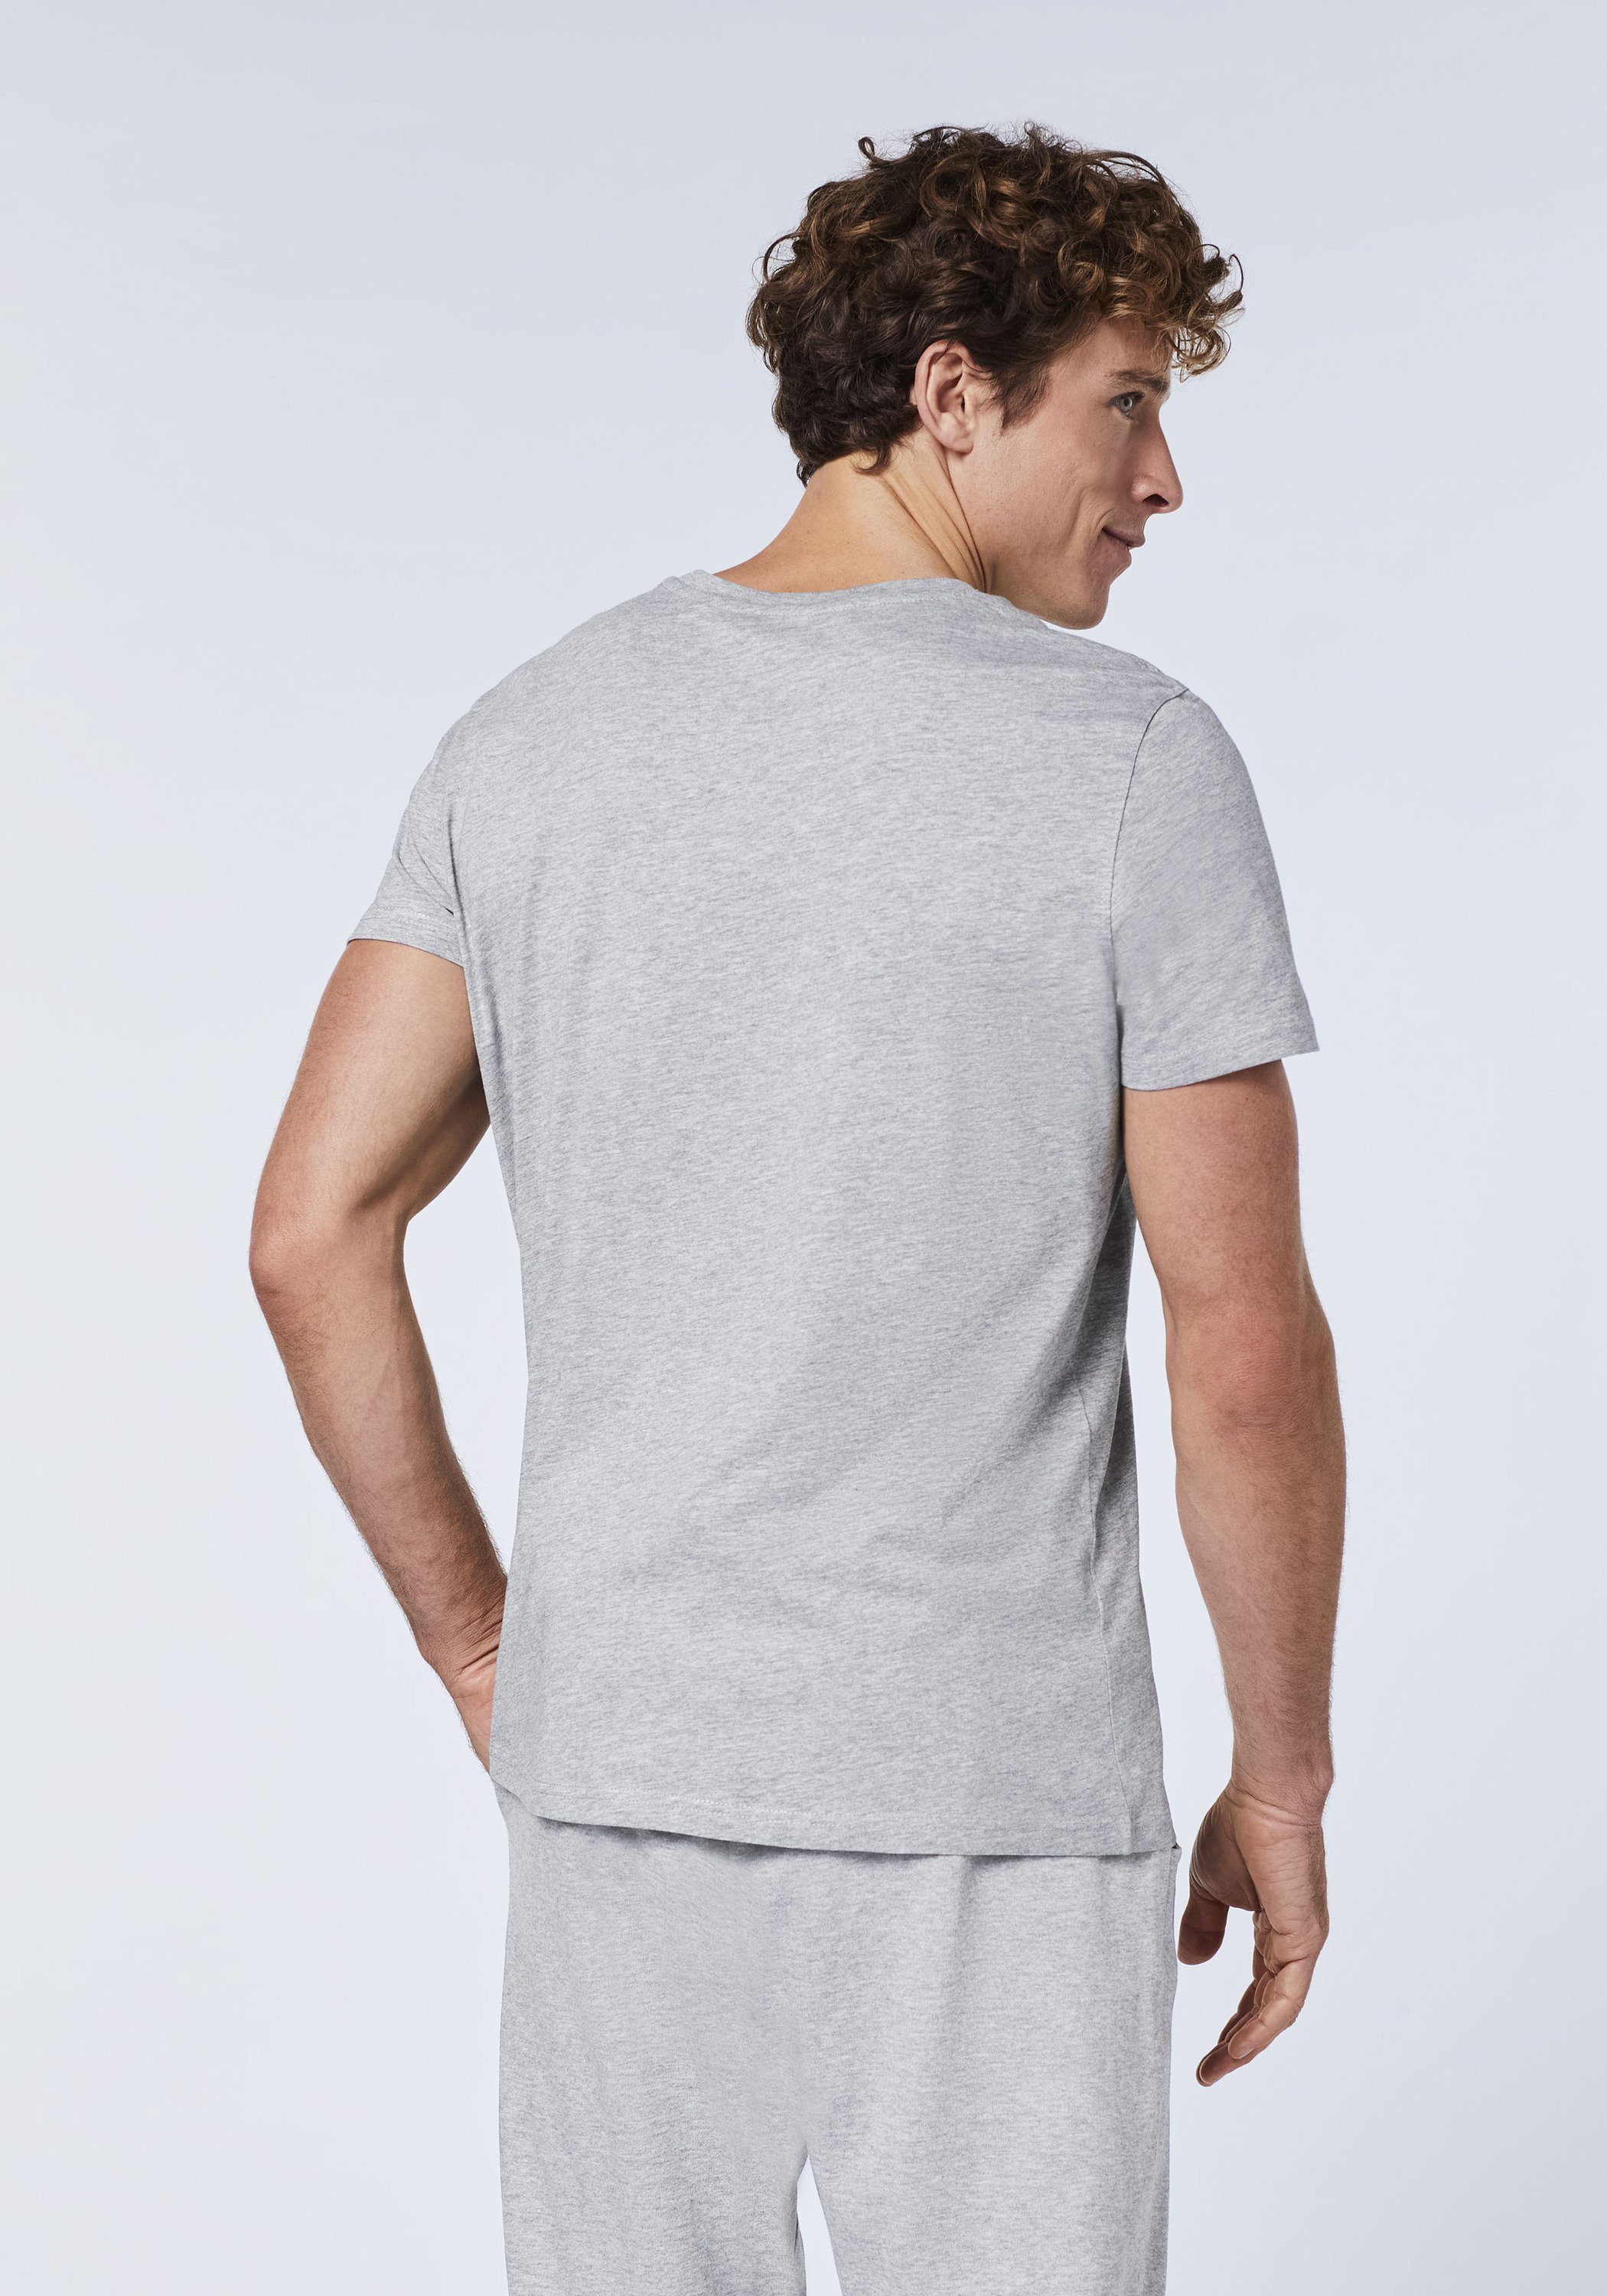 Schriftzug Mountain-Look Melange Neutral Print-Shirt im 17-4402M Oklahoma Jeans Gray mit